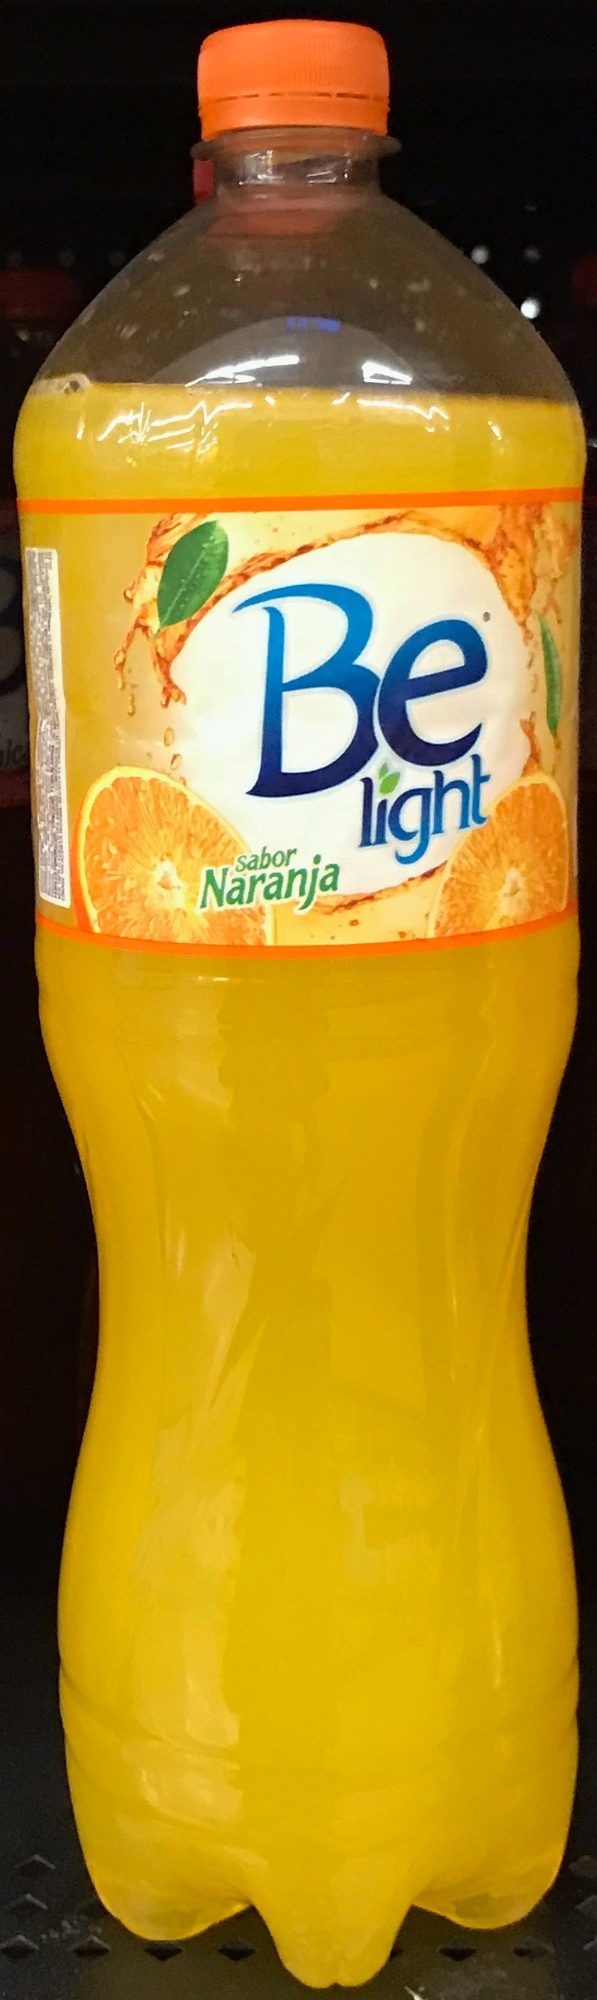 Belight sabor Naranja - نتاج - es